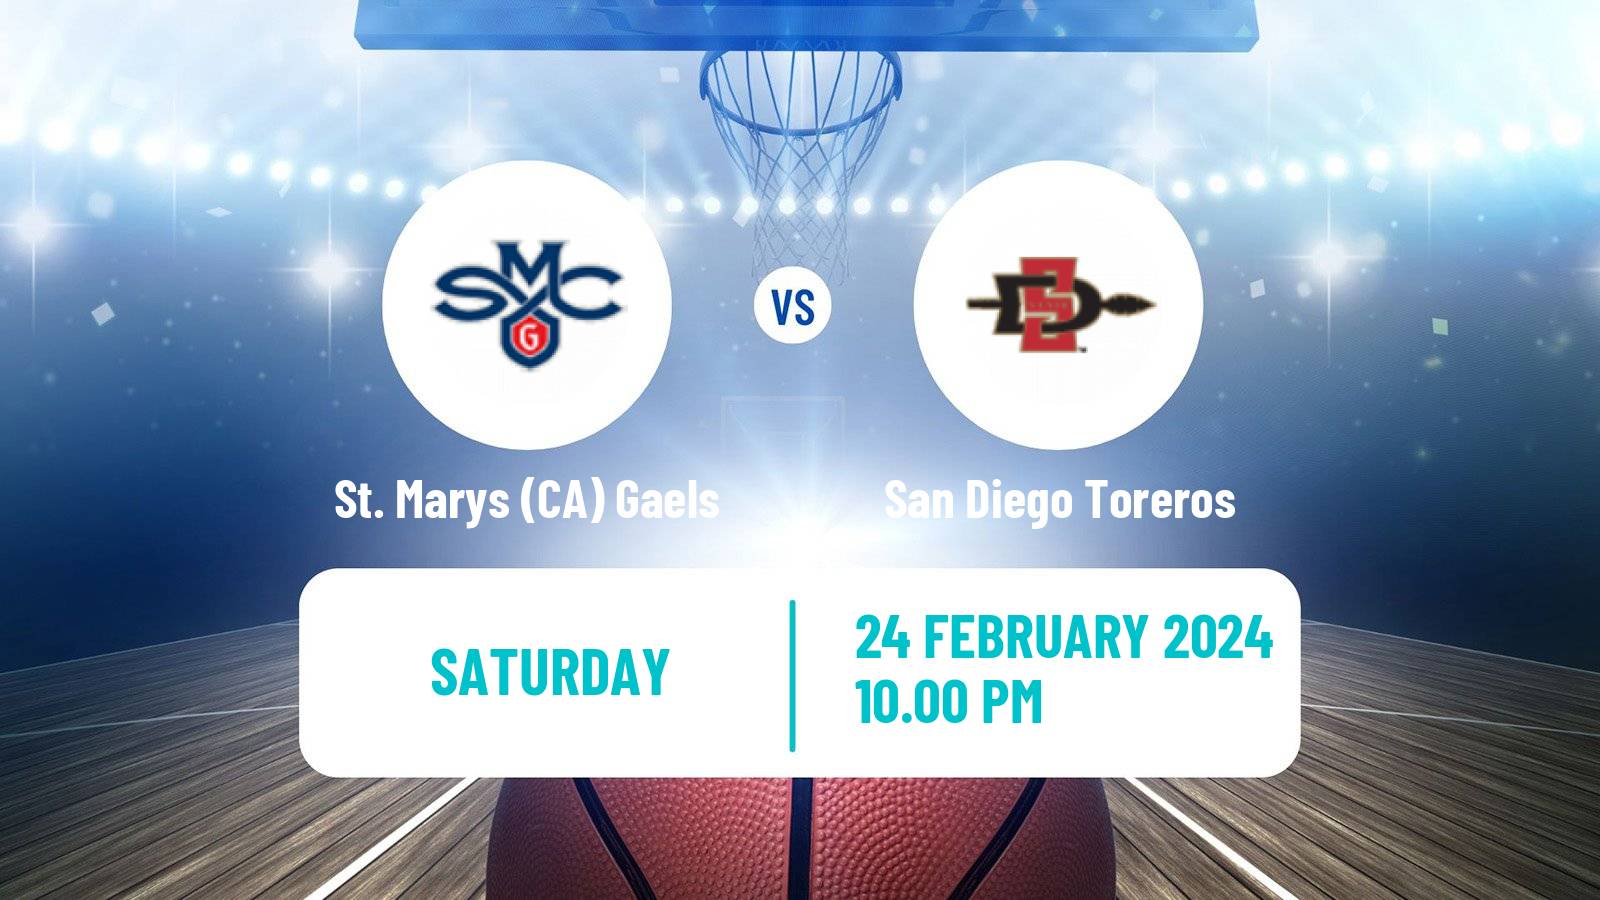 Basketball NCAA College Basketball St. Marys (CA) Gaels - San Diego Toreros